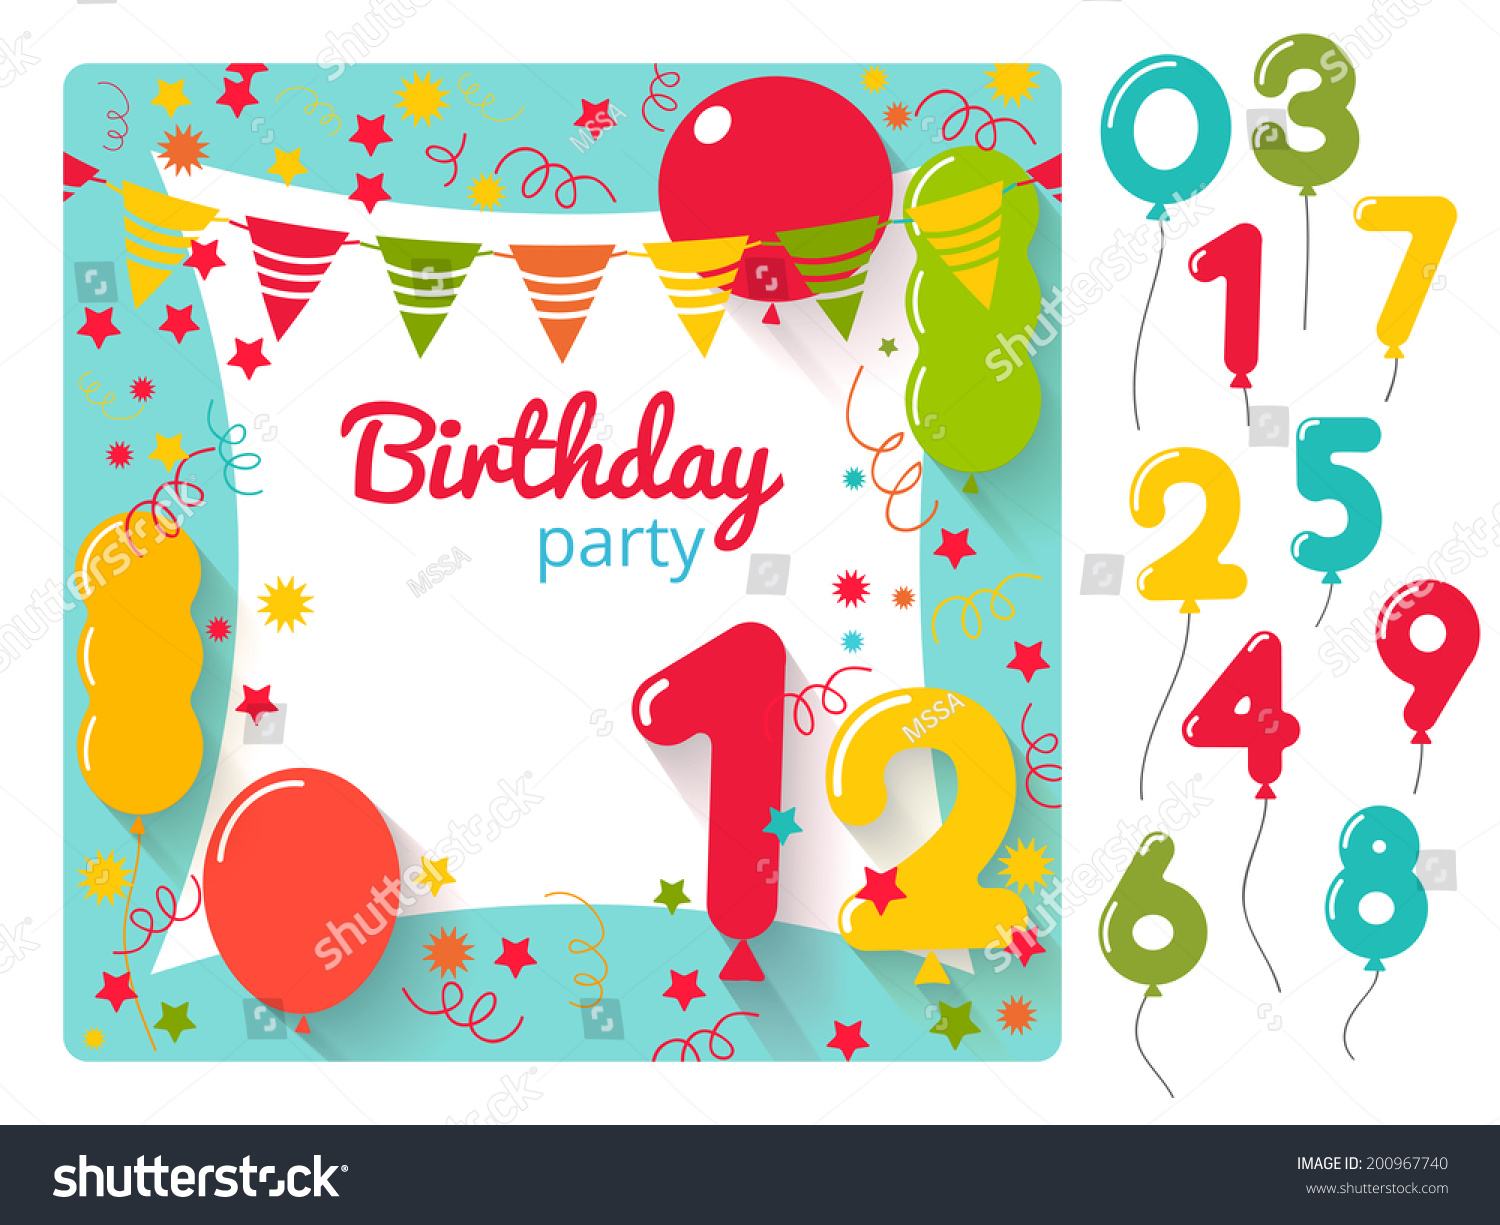 Birthday Invitation Card Design Template Free Download ...